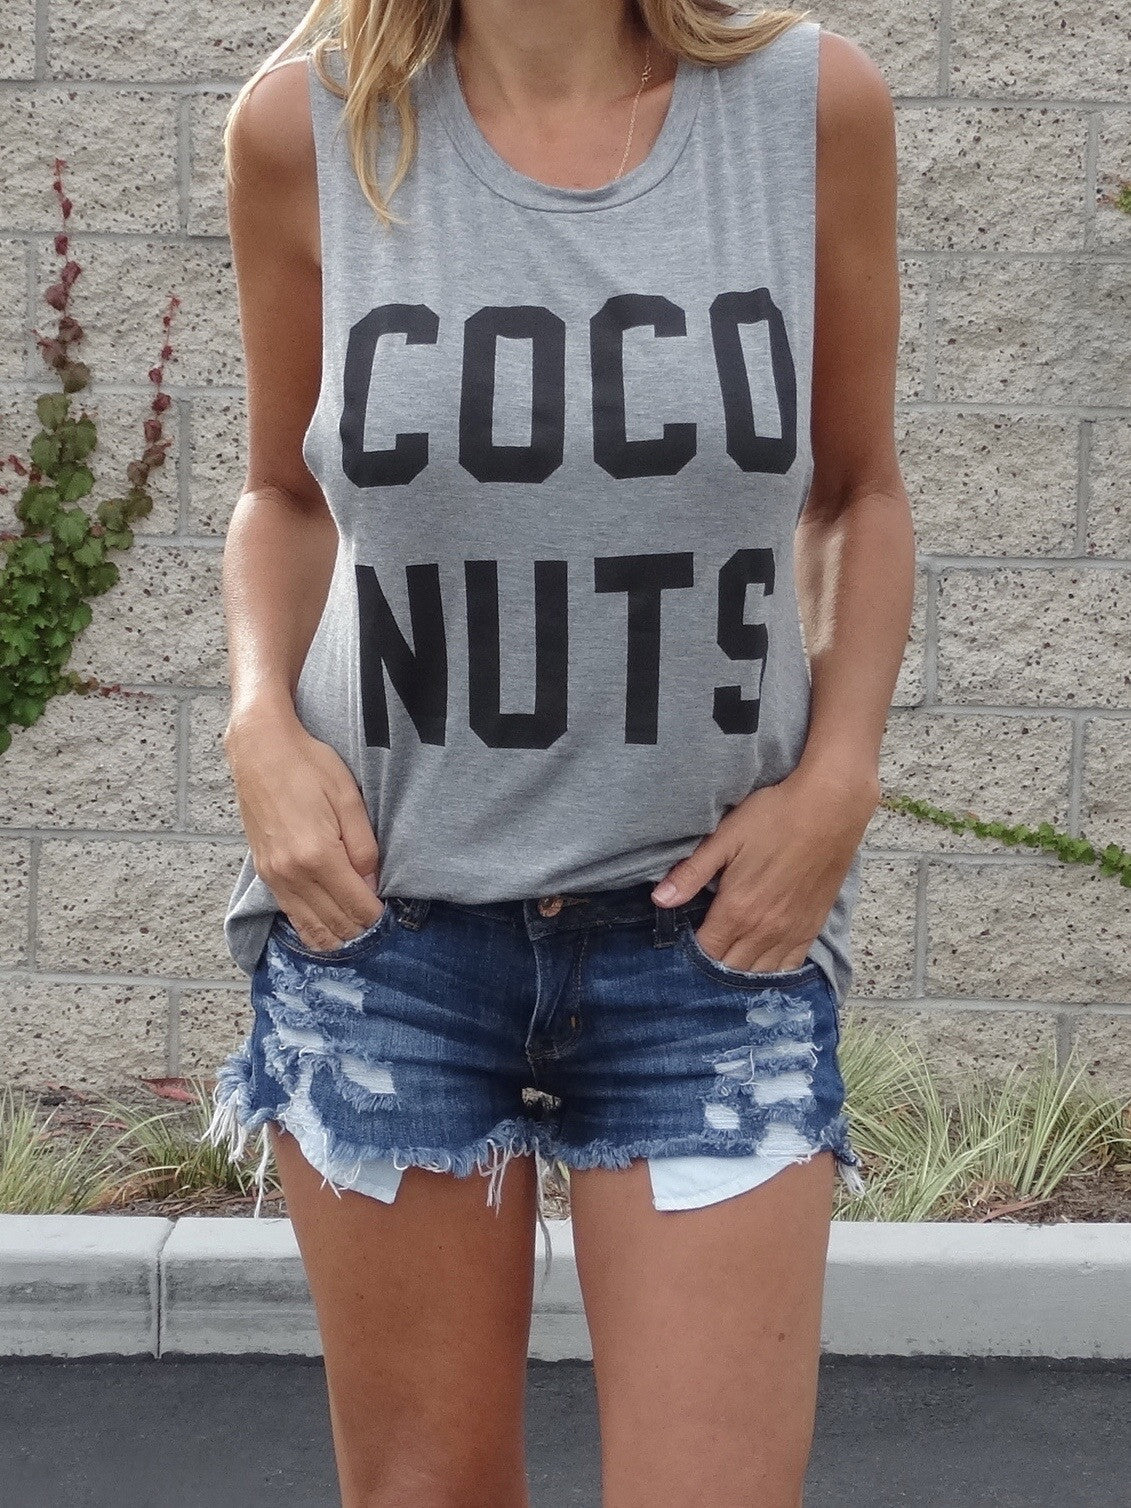 Coco Nuts Tee